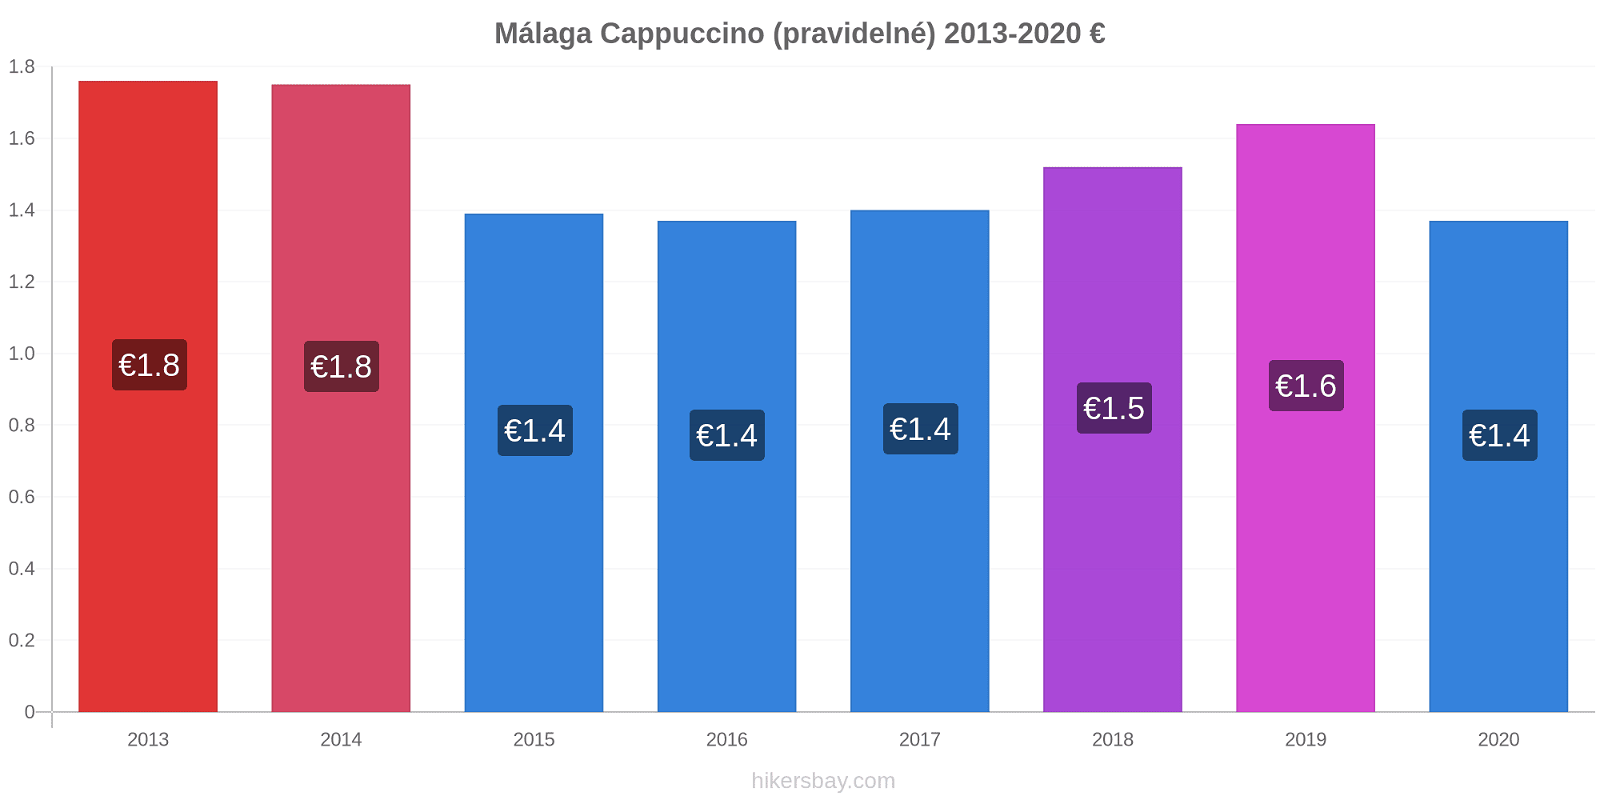 Málaga změny cen Cappuccino (pravidelné) hikersbay.com